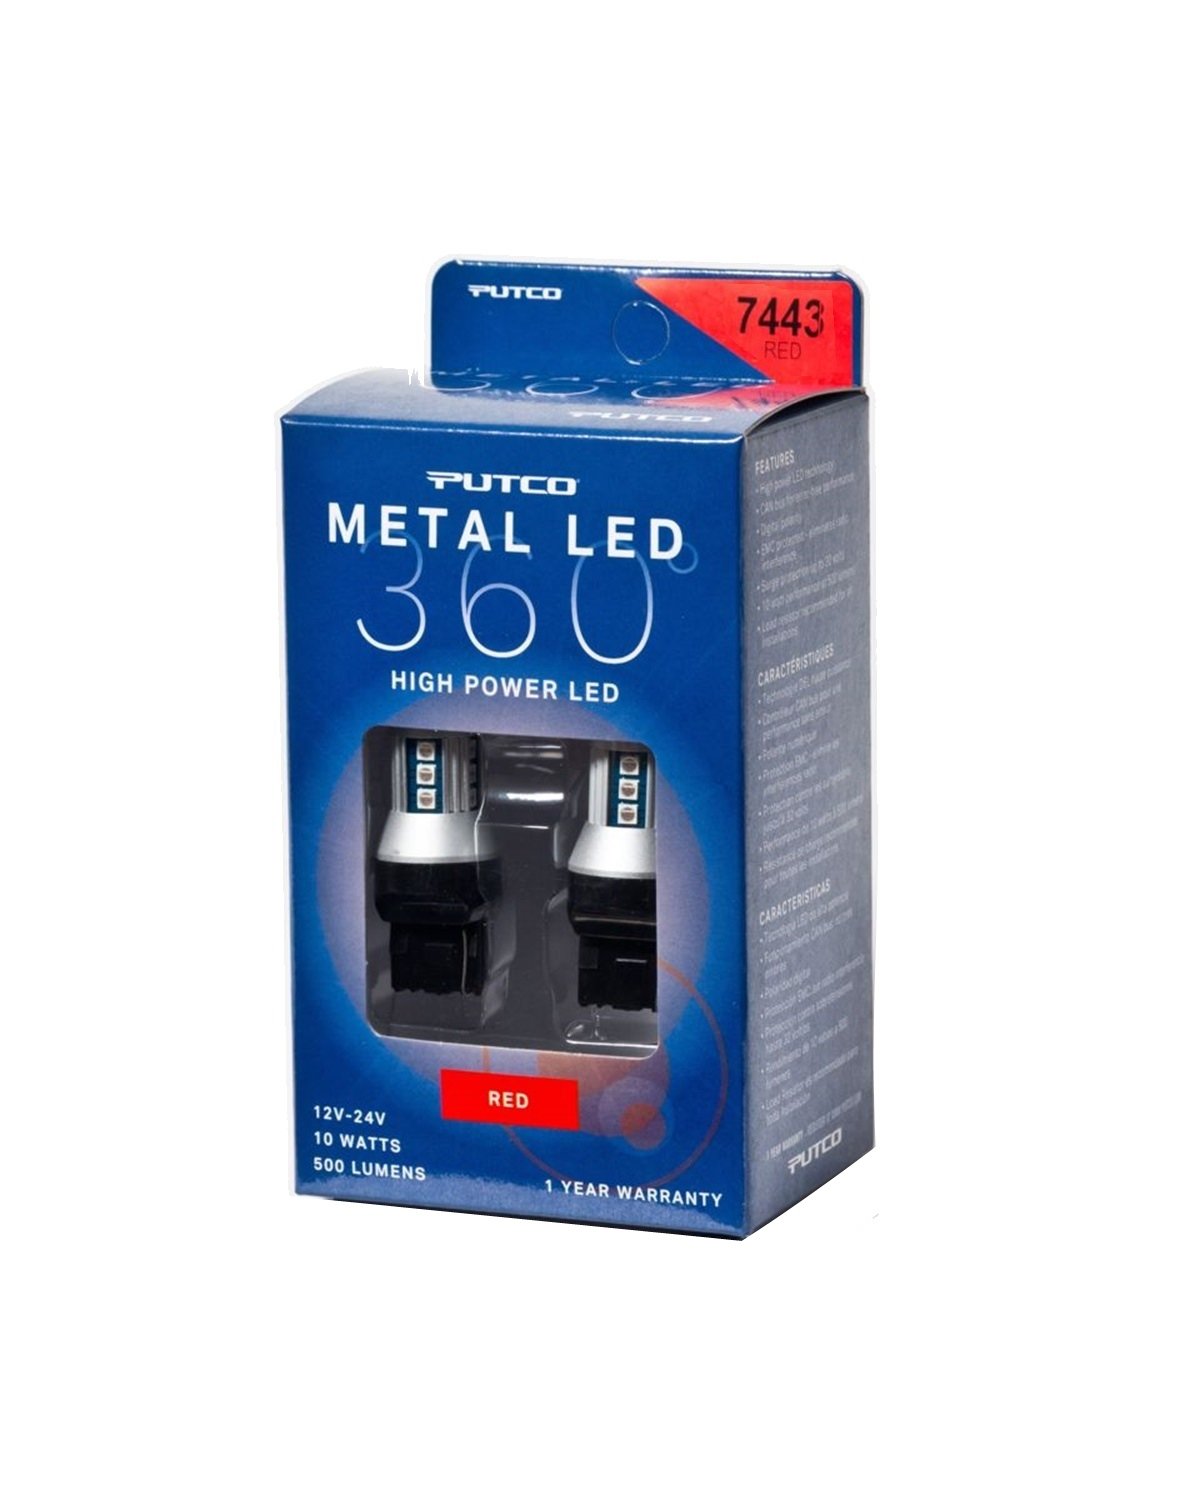 Putco 347443R-360 Metal LED Bulb, 1 Pack